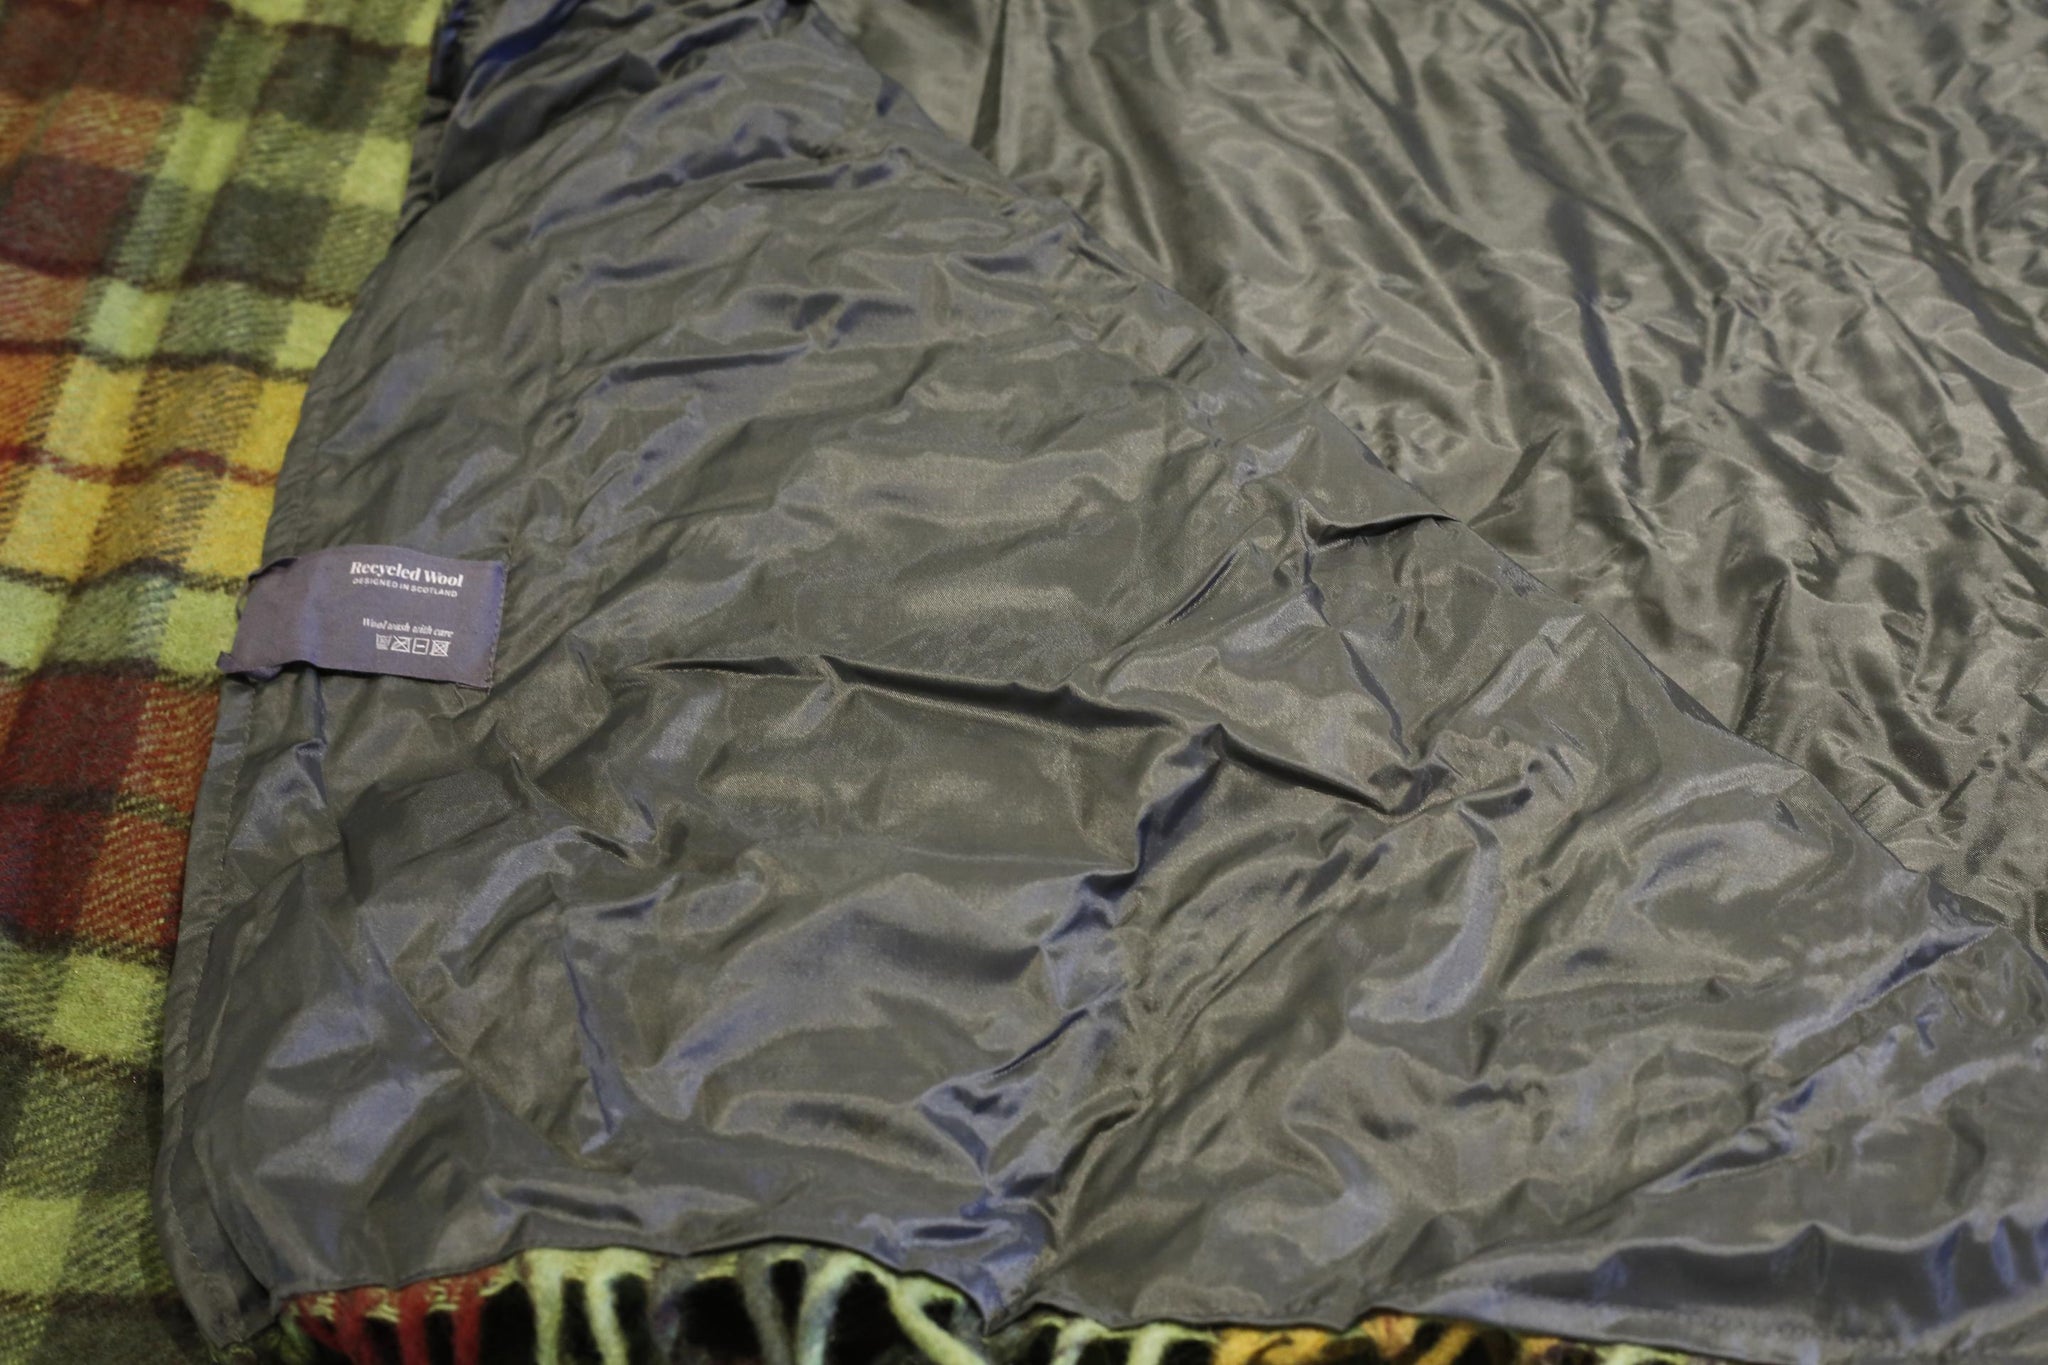 Recycled Wool Waterproof Picnic Blanket in Buchanan Autumn Tartan